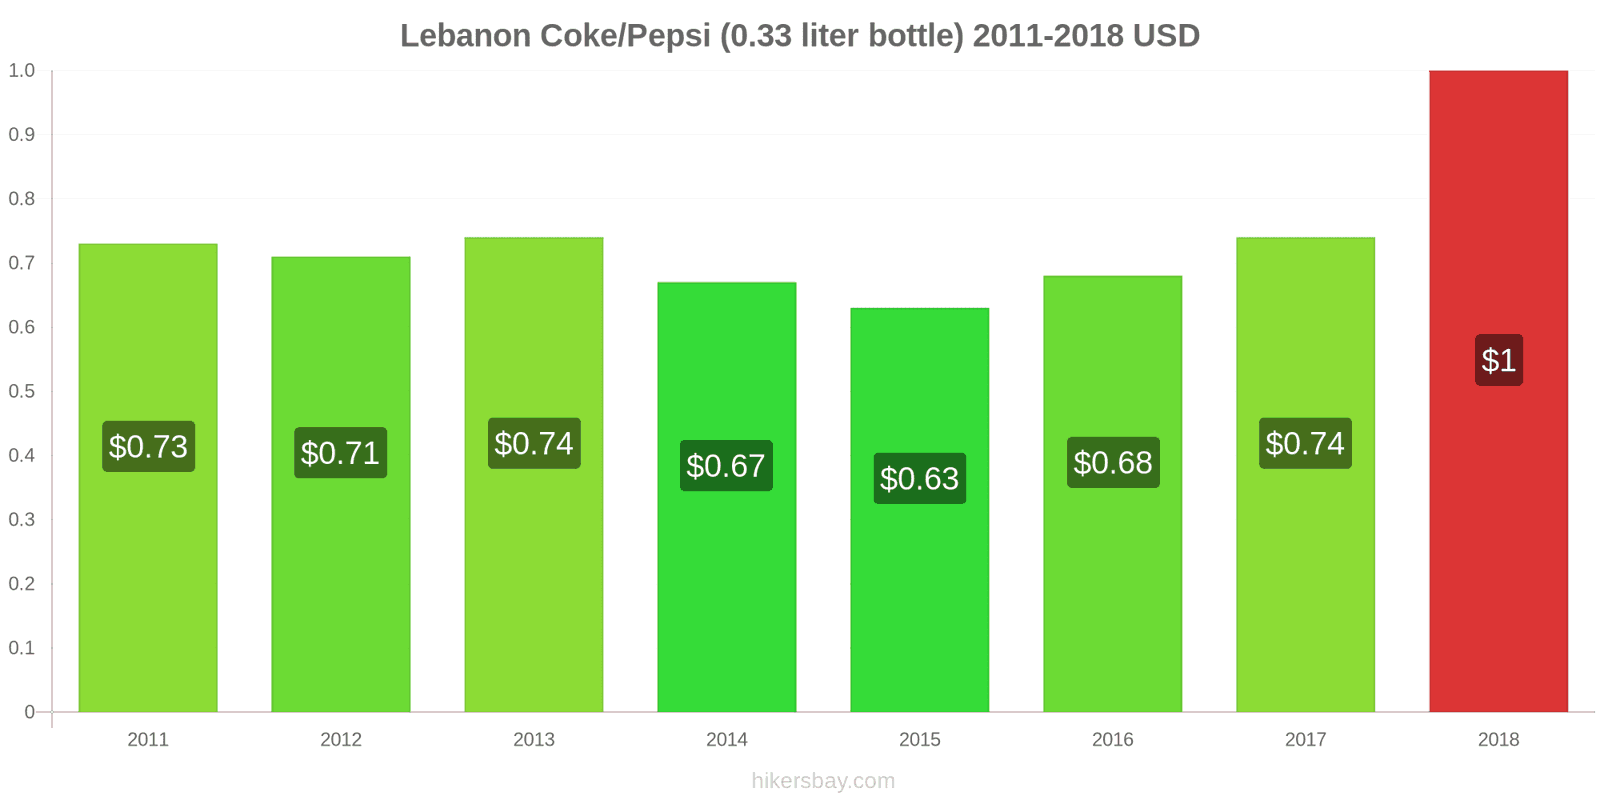 Lebanon price changes Coke/Pepsi (0.33 liter bottle) hikersbay.com